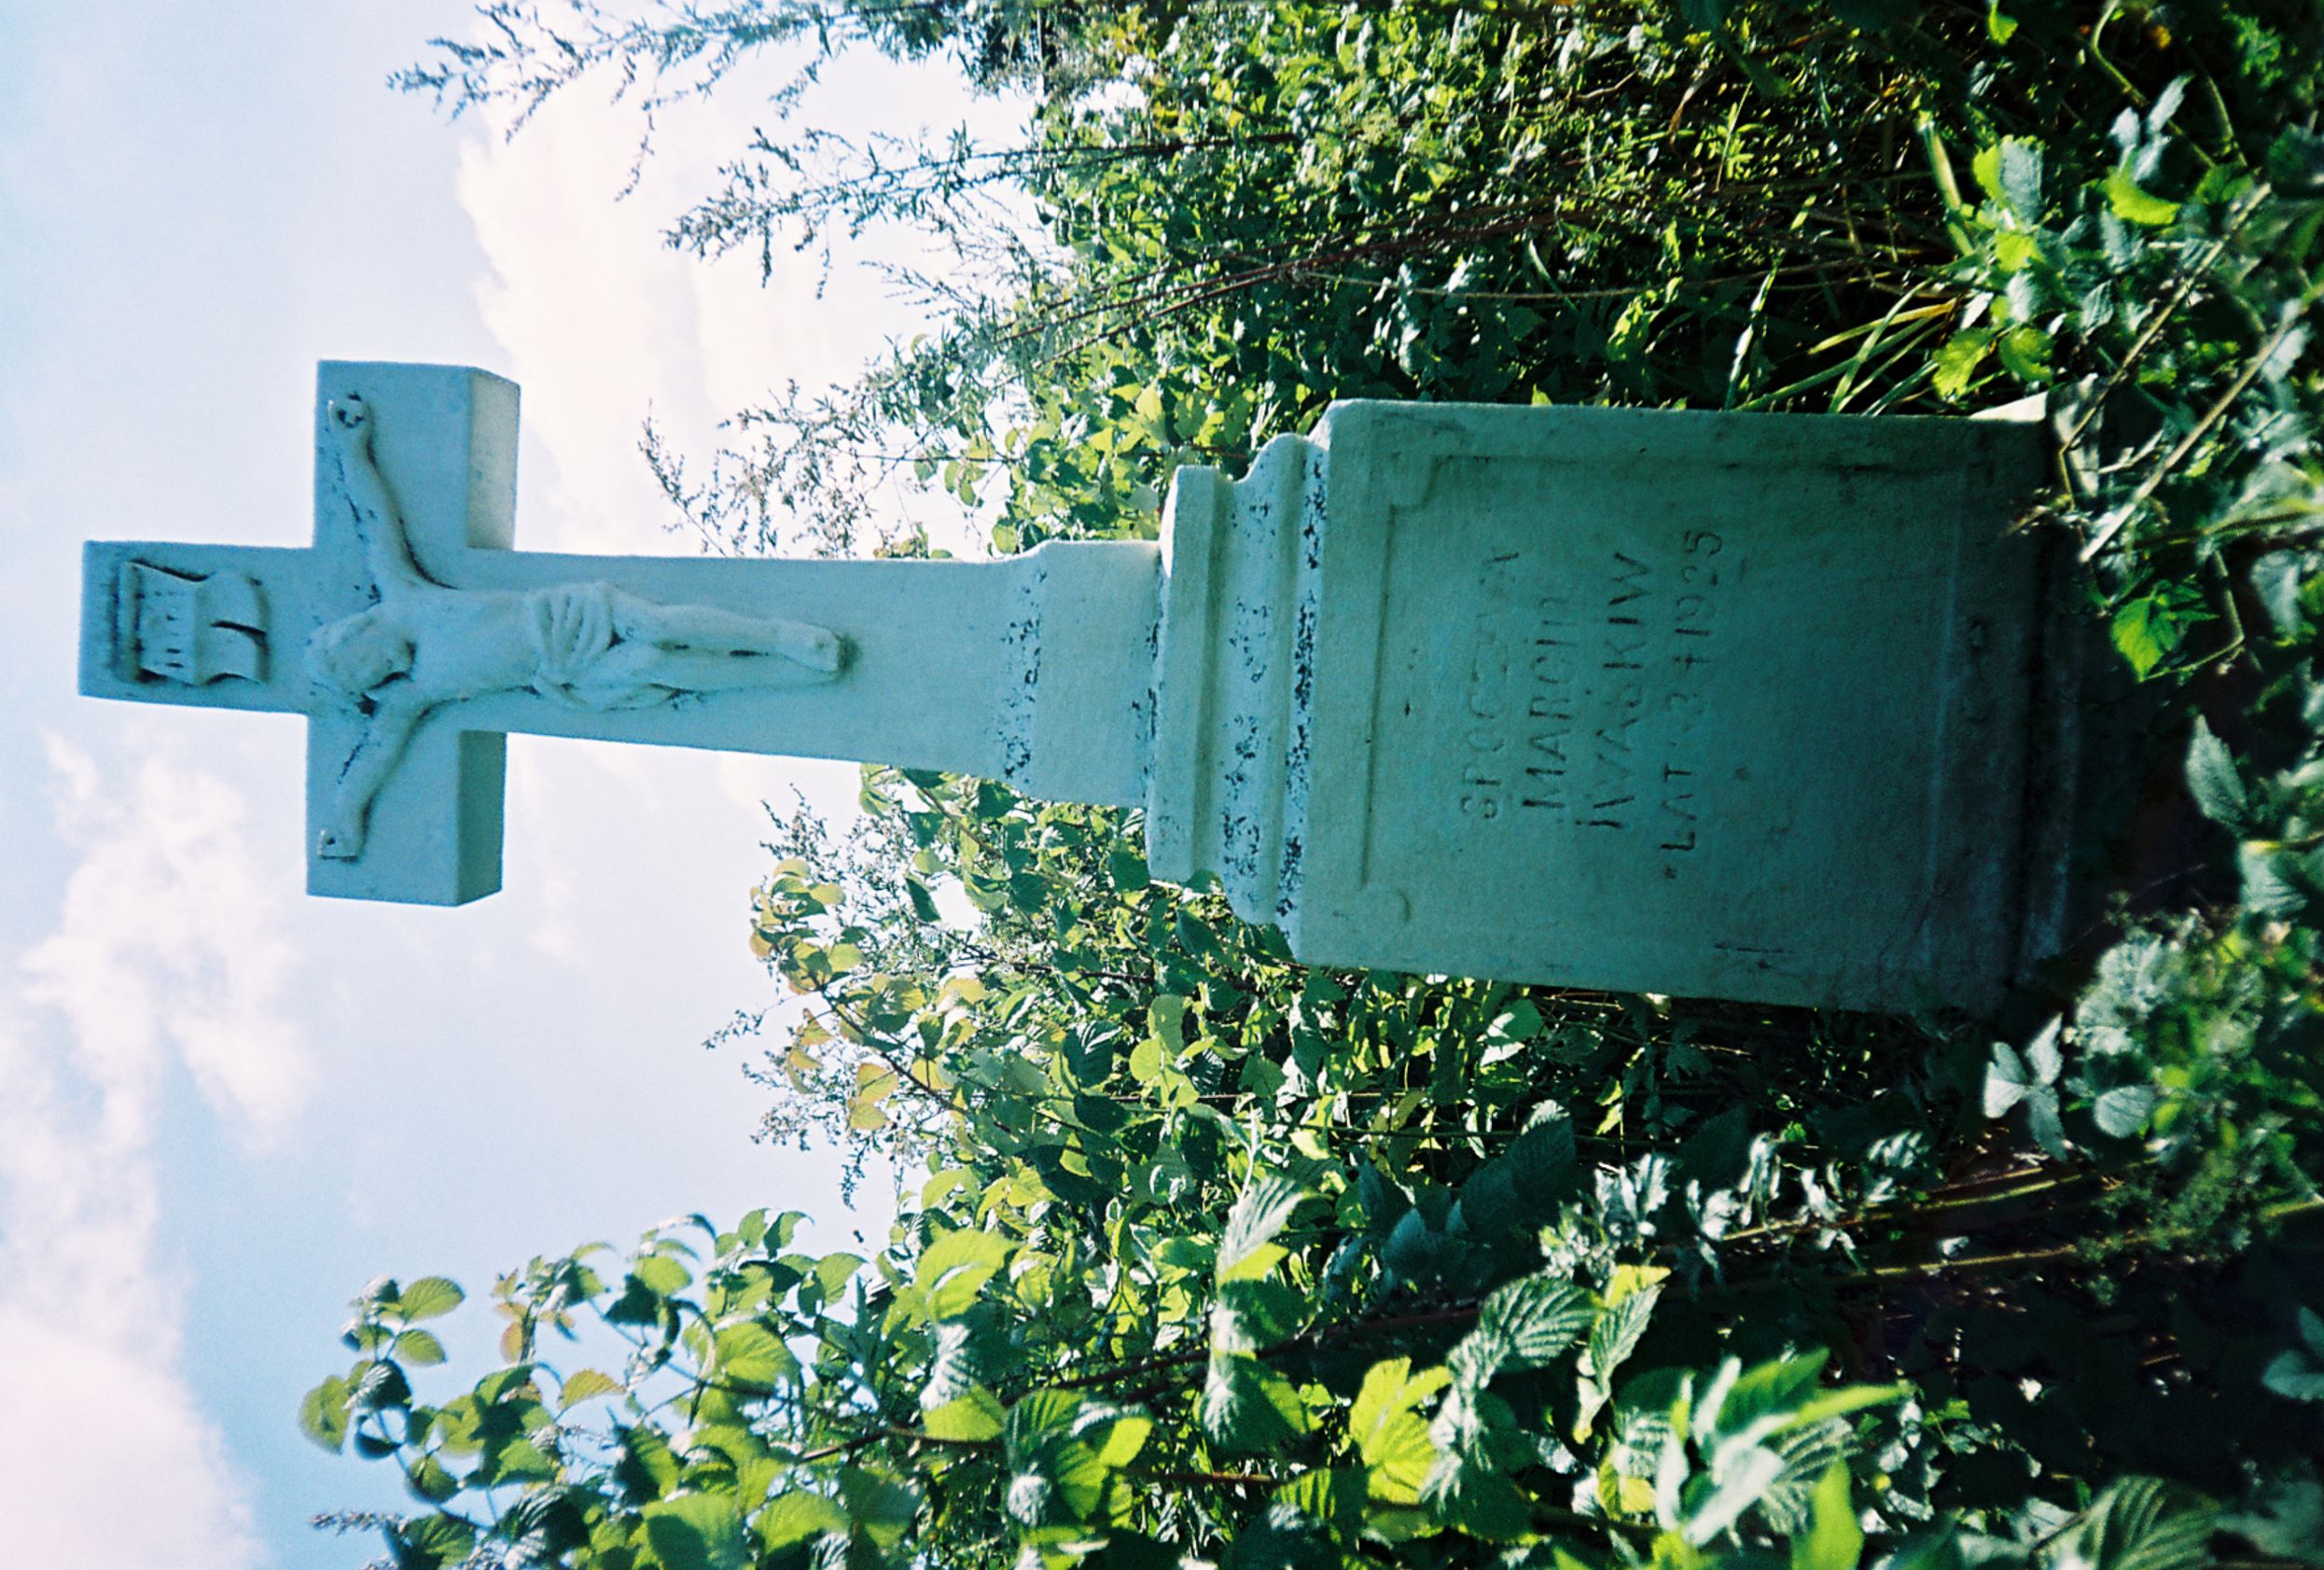 Tombstone of Martin Ivashkiv, Pomorie cemetery, as of 2006.